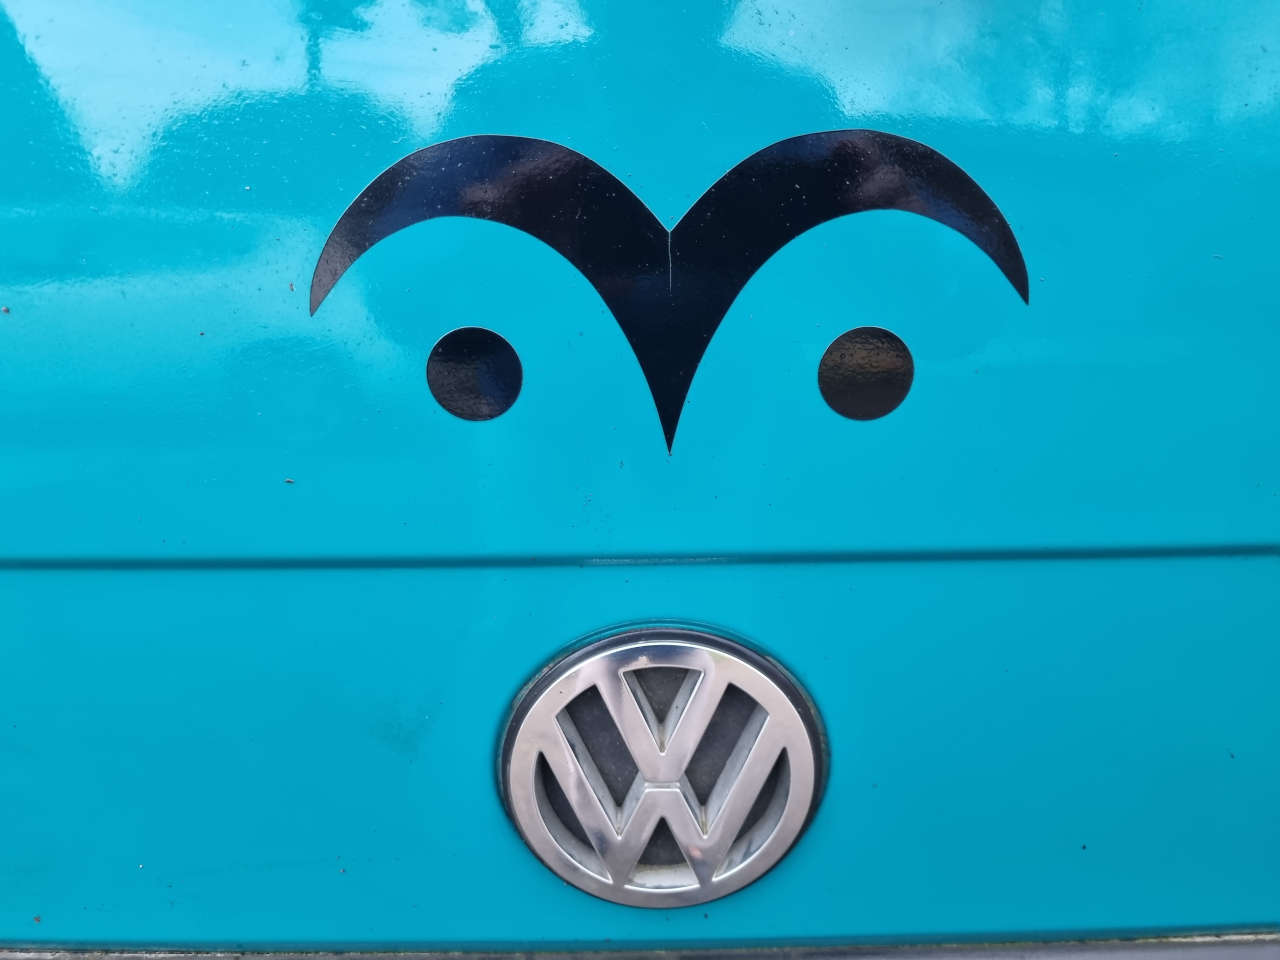 Eye symbol logo with VW logo beneath it